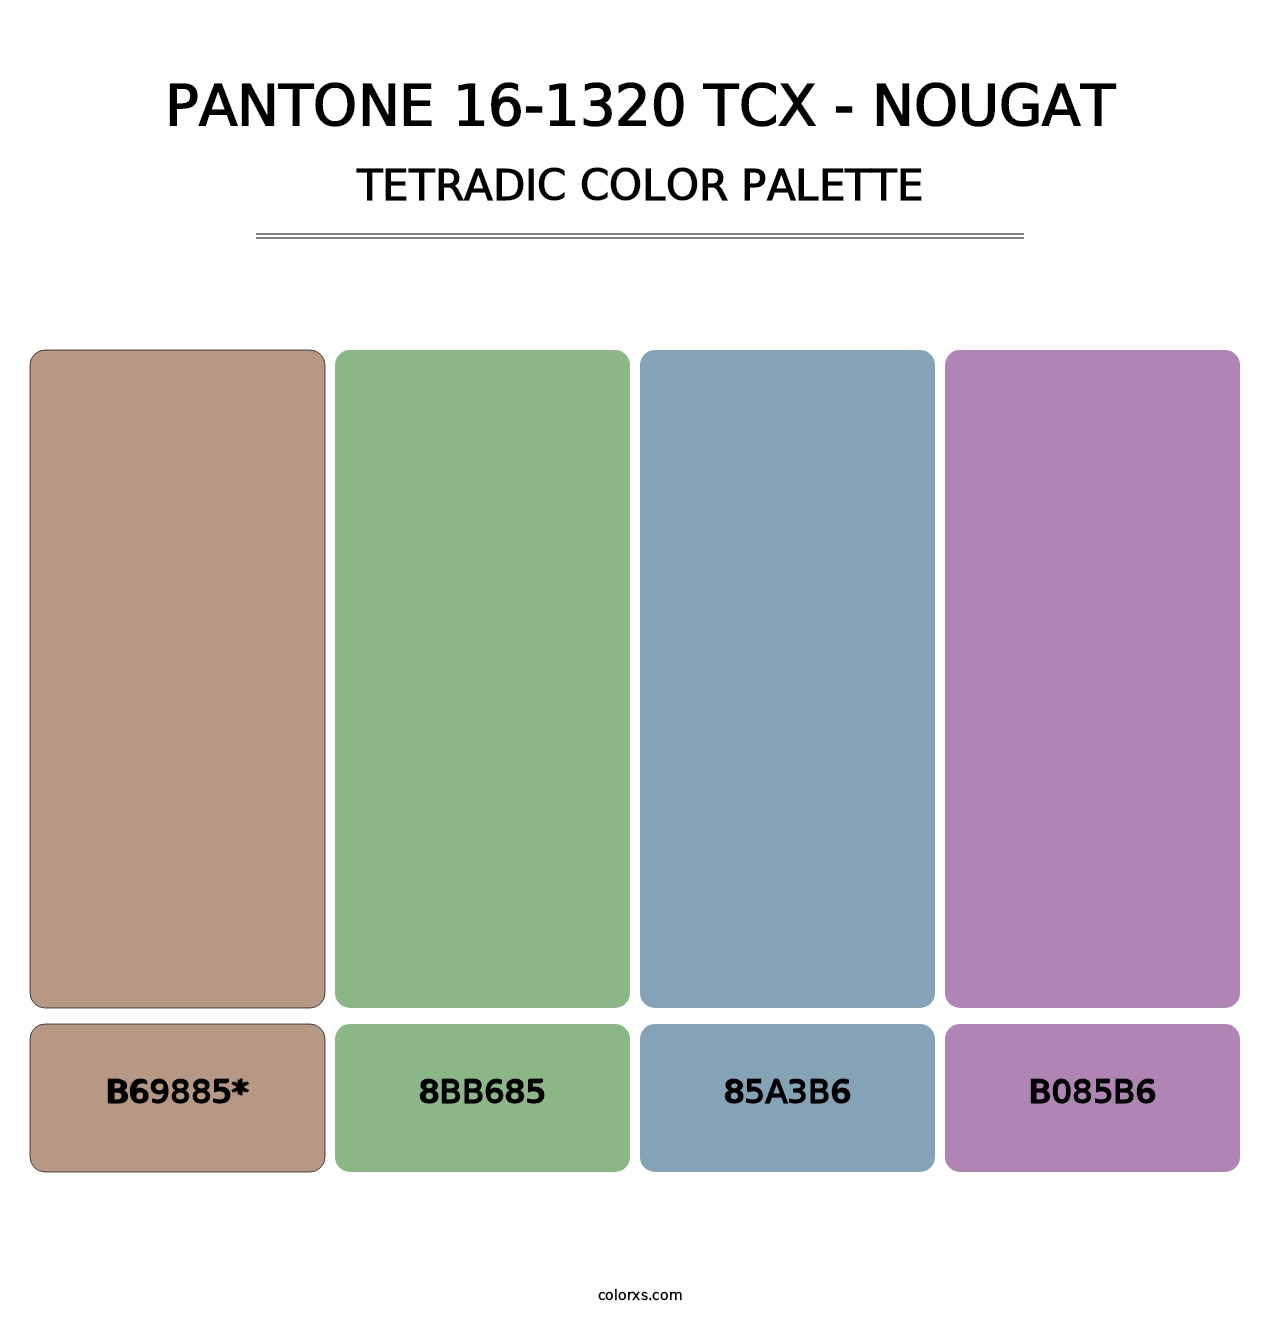 PANTONE 16-1320 TCX - Nougat - Tetradic Color Palette